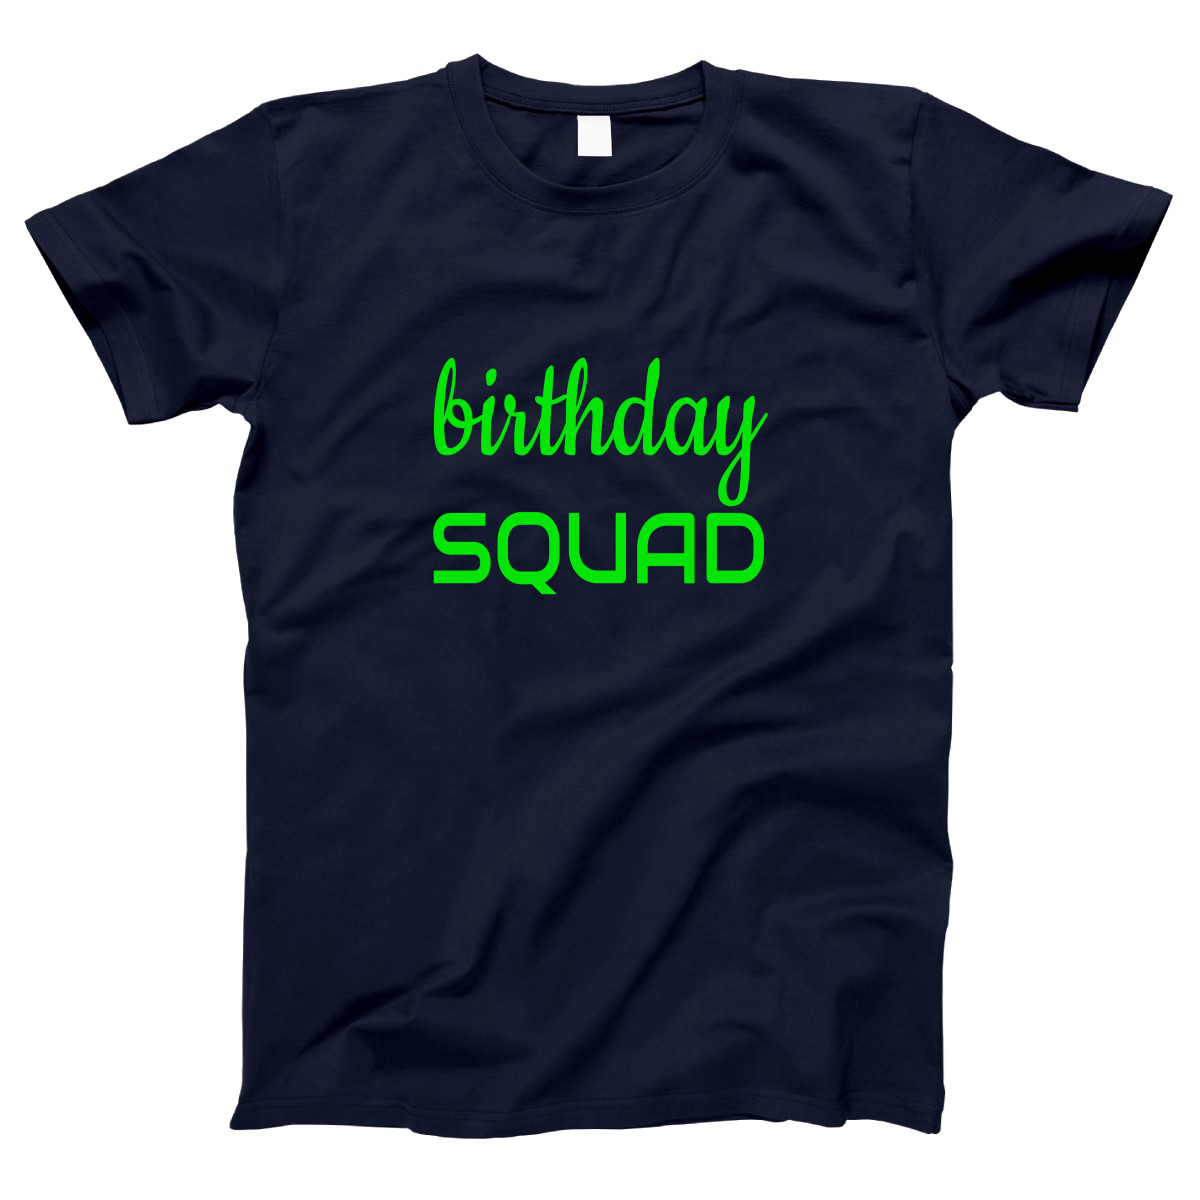 Birthday SQUAD Women's T-shirt | Navy